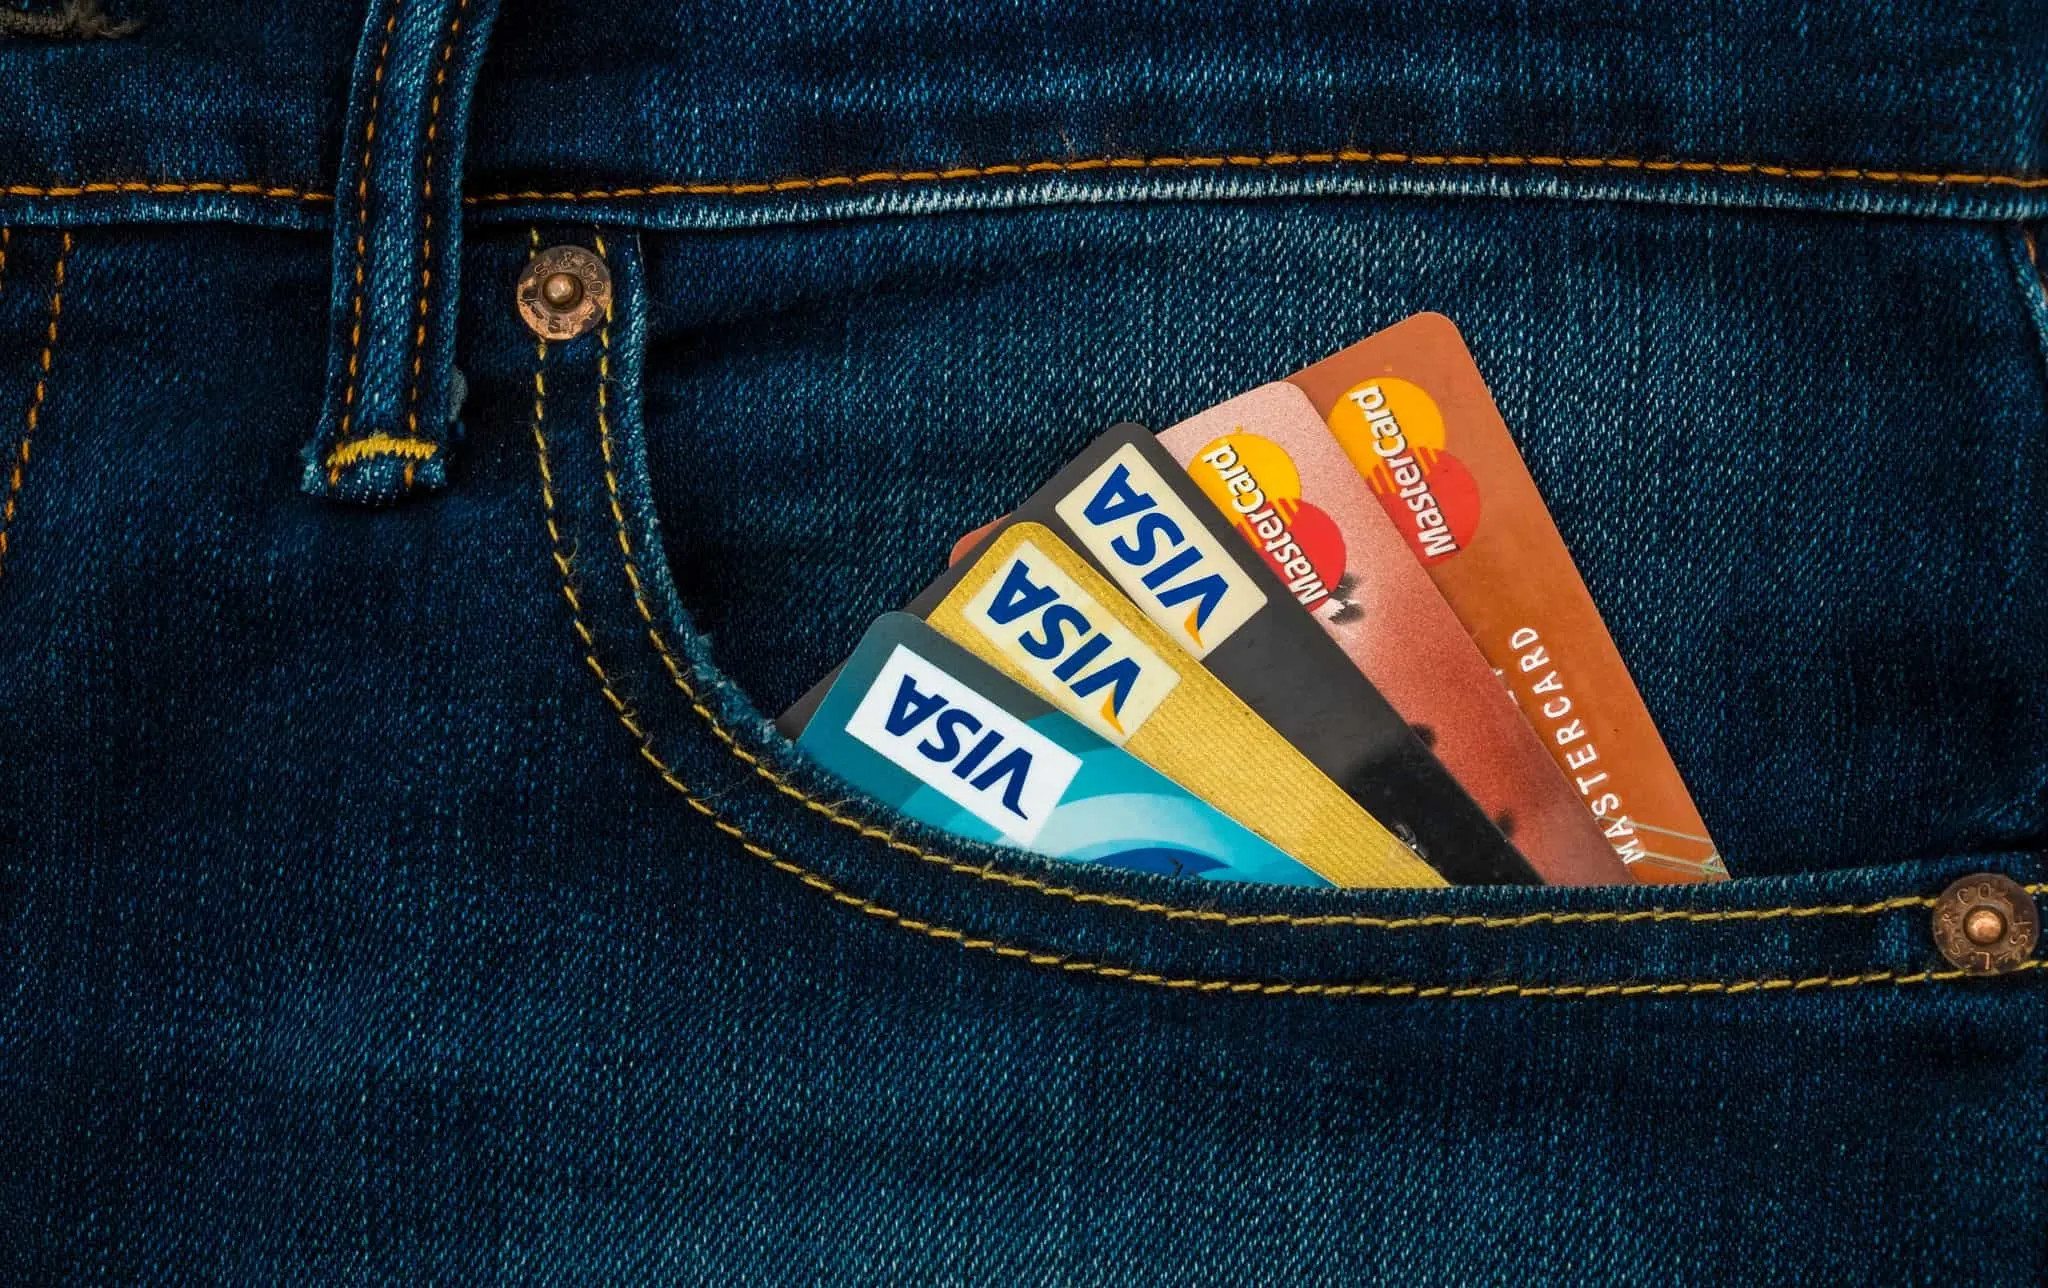 Credit cards in jeans' pocket